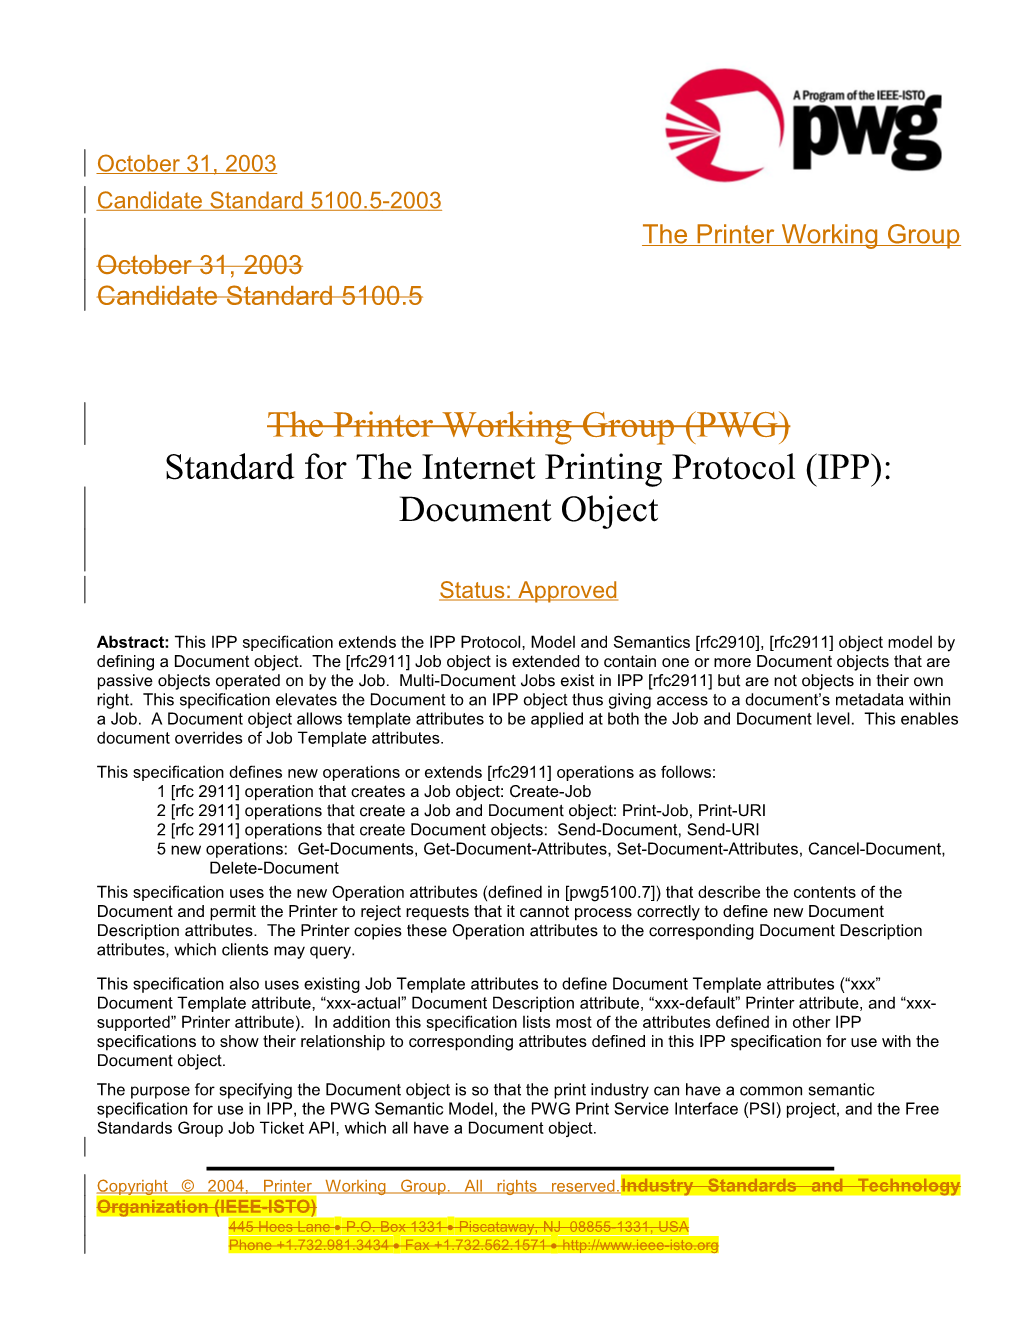 Standard for IPP Document Object